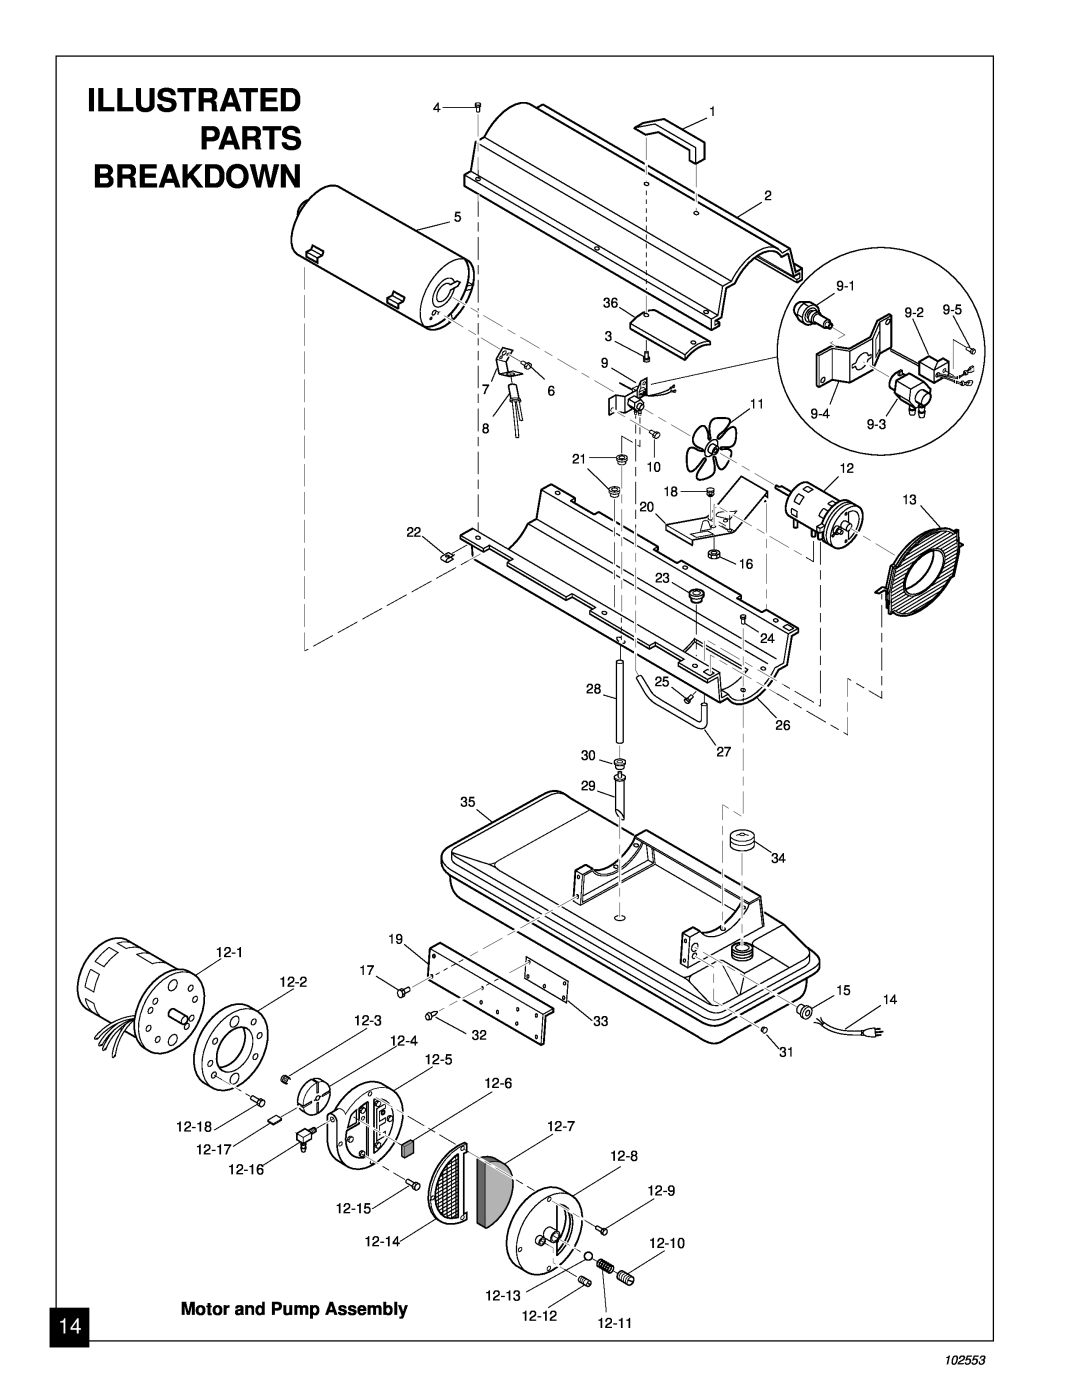 Desa REM50C, B50H owner manual Illustrated, Parts, Breakdown, Motor and Pump Assembly 